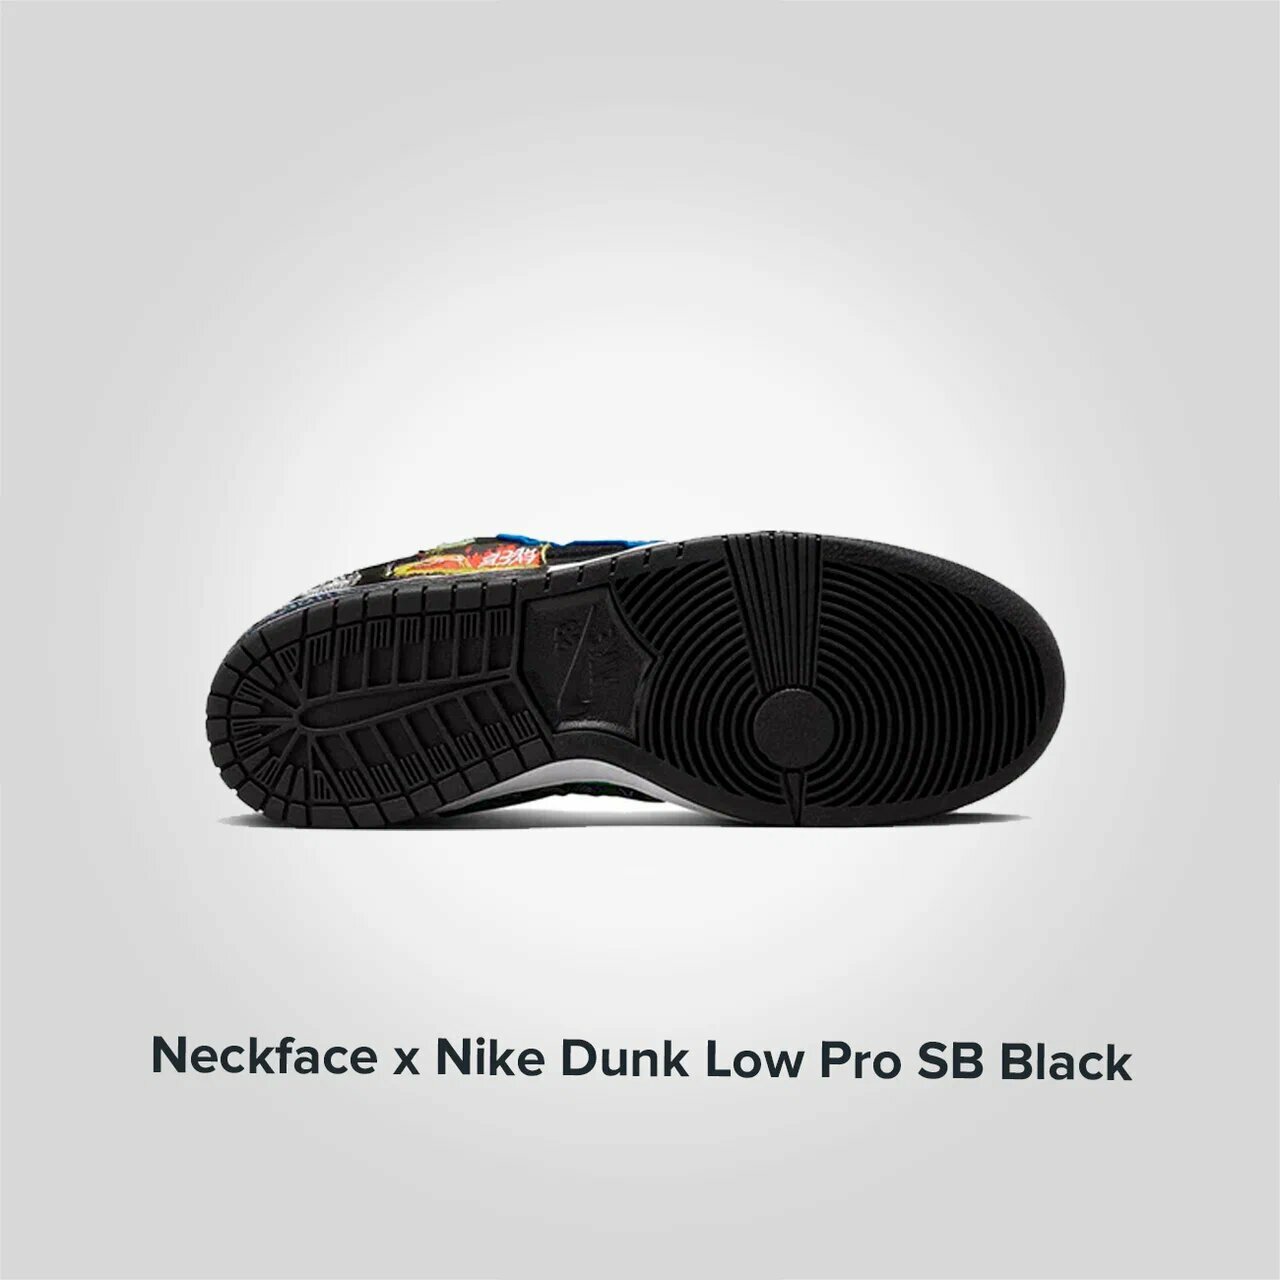 Neckface X Dunk Low Pro SB Black